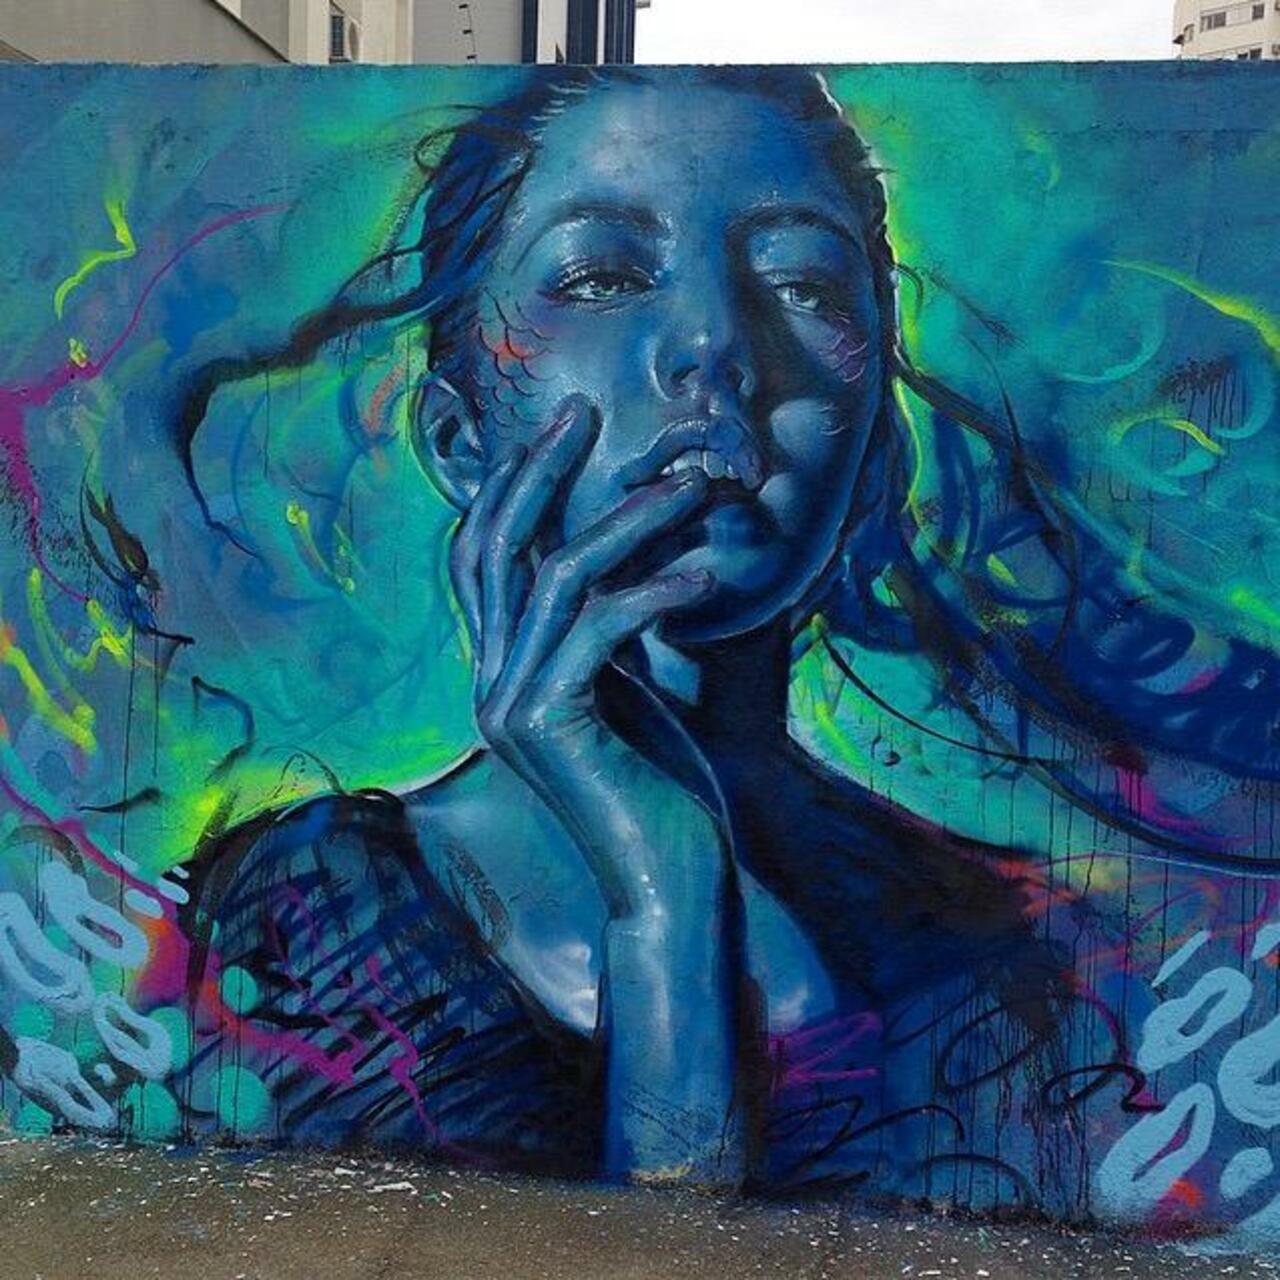 Thiago Valdi new Street Art piece titled 'Day Dreamer'

#art #mural #graffiti #streetart http://t.co/HsEg1AgW9B